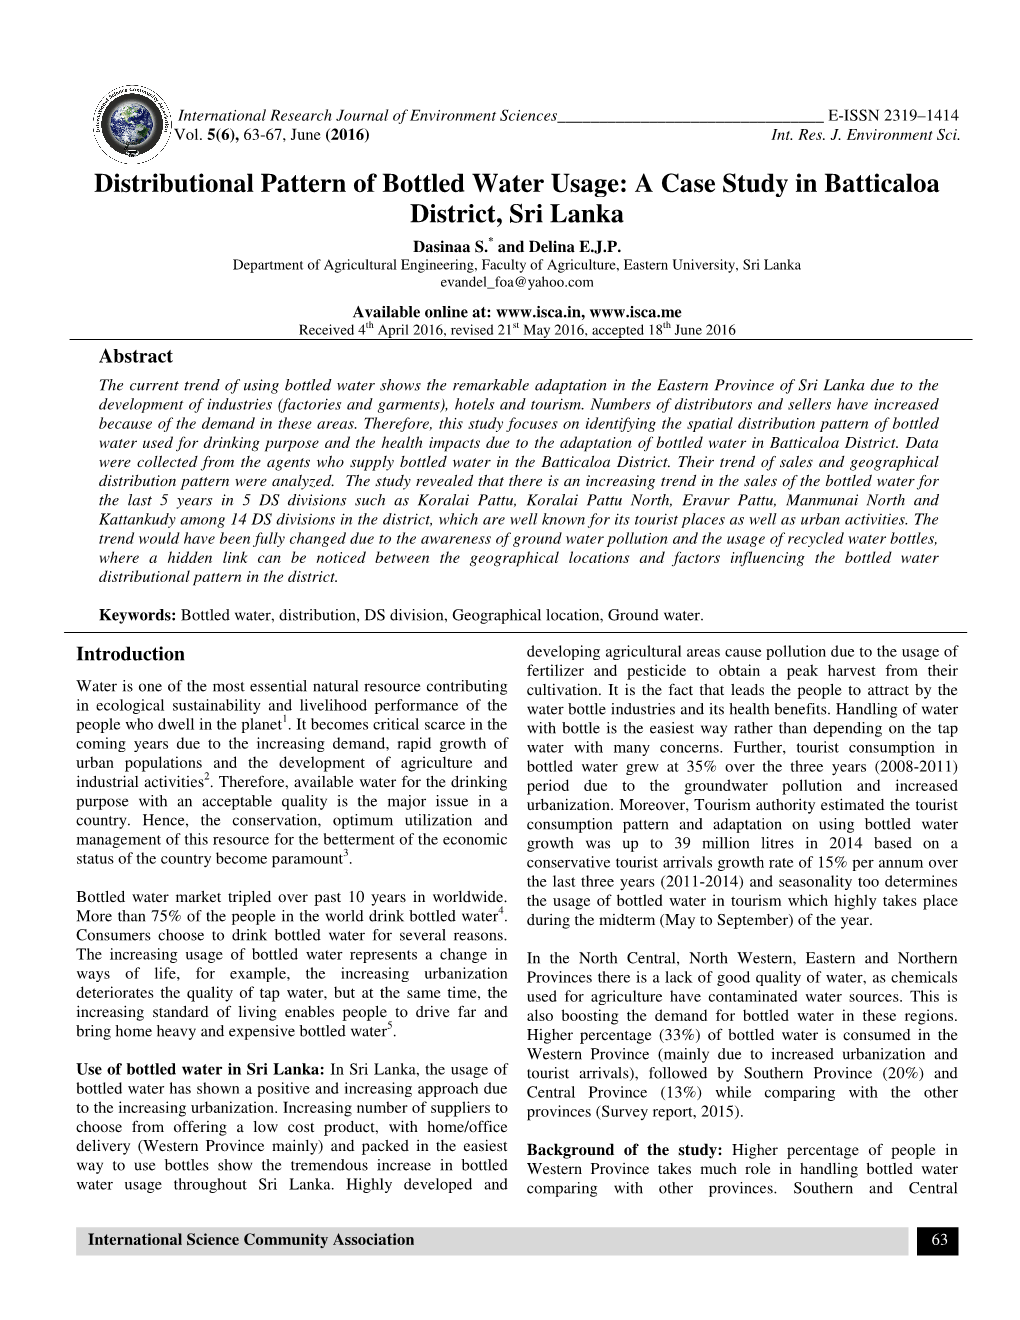 L Pattern of Bottled Water Usage: a Case Study in Battica District, Sri